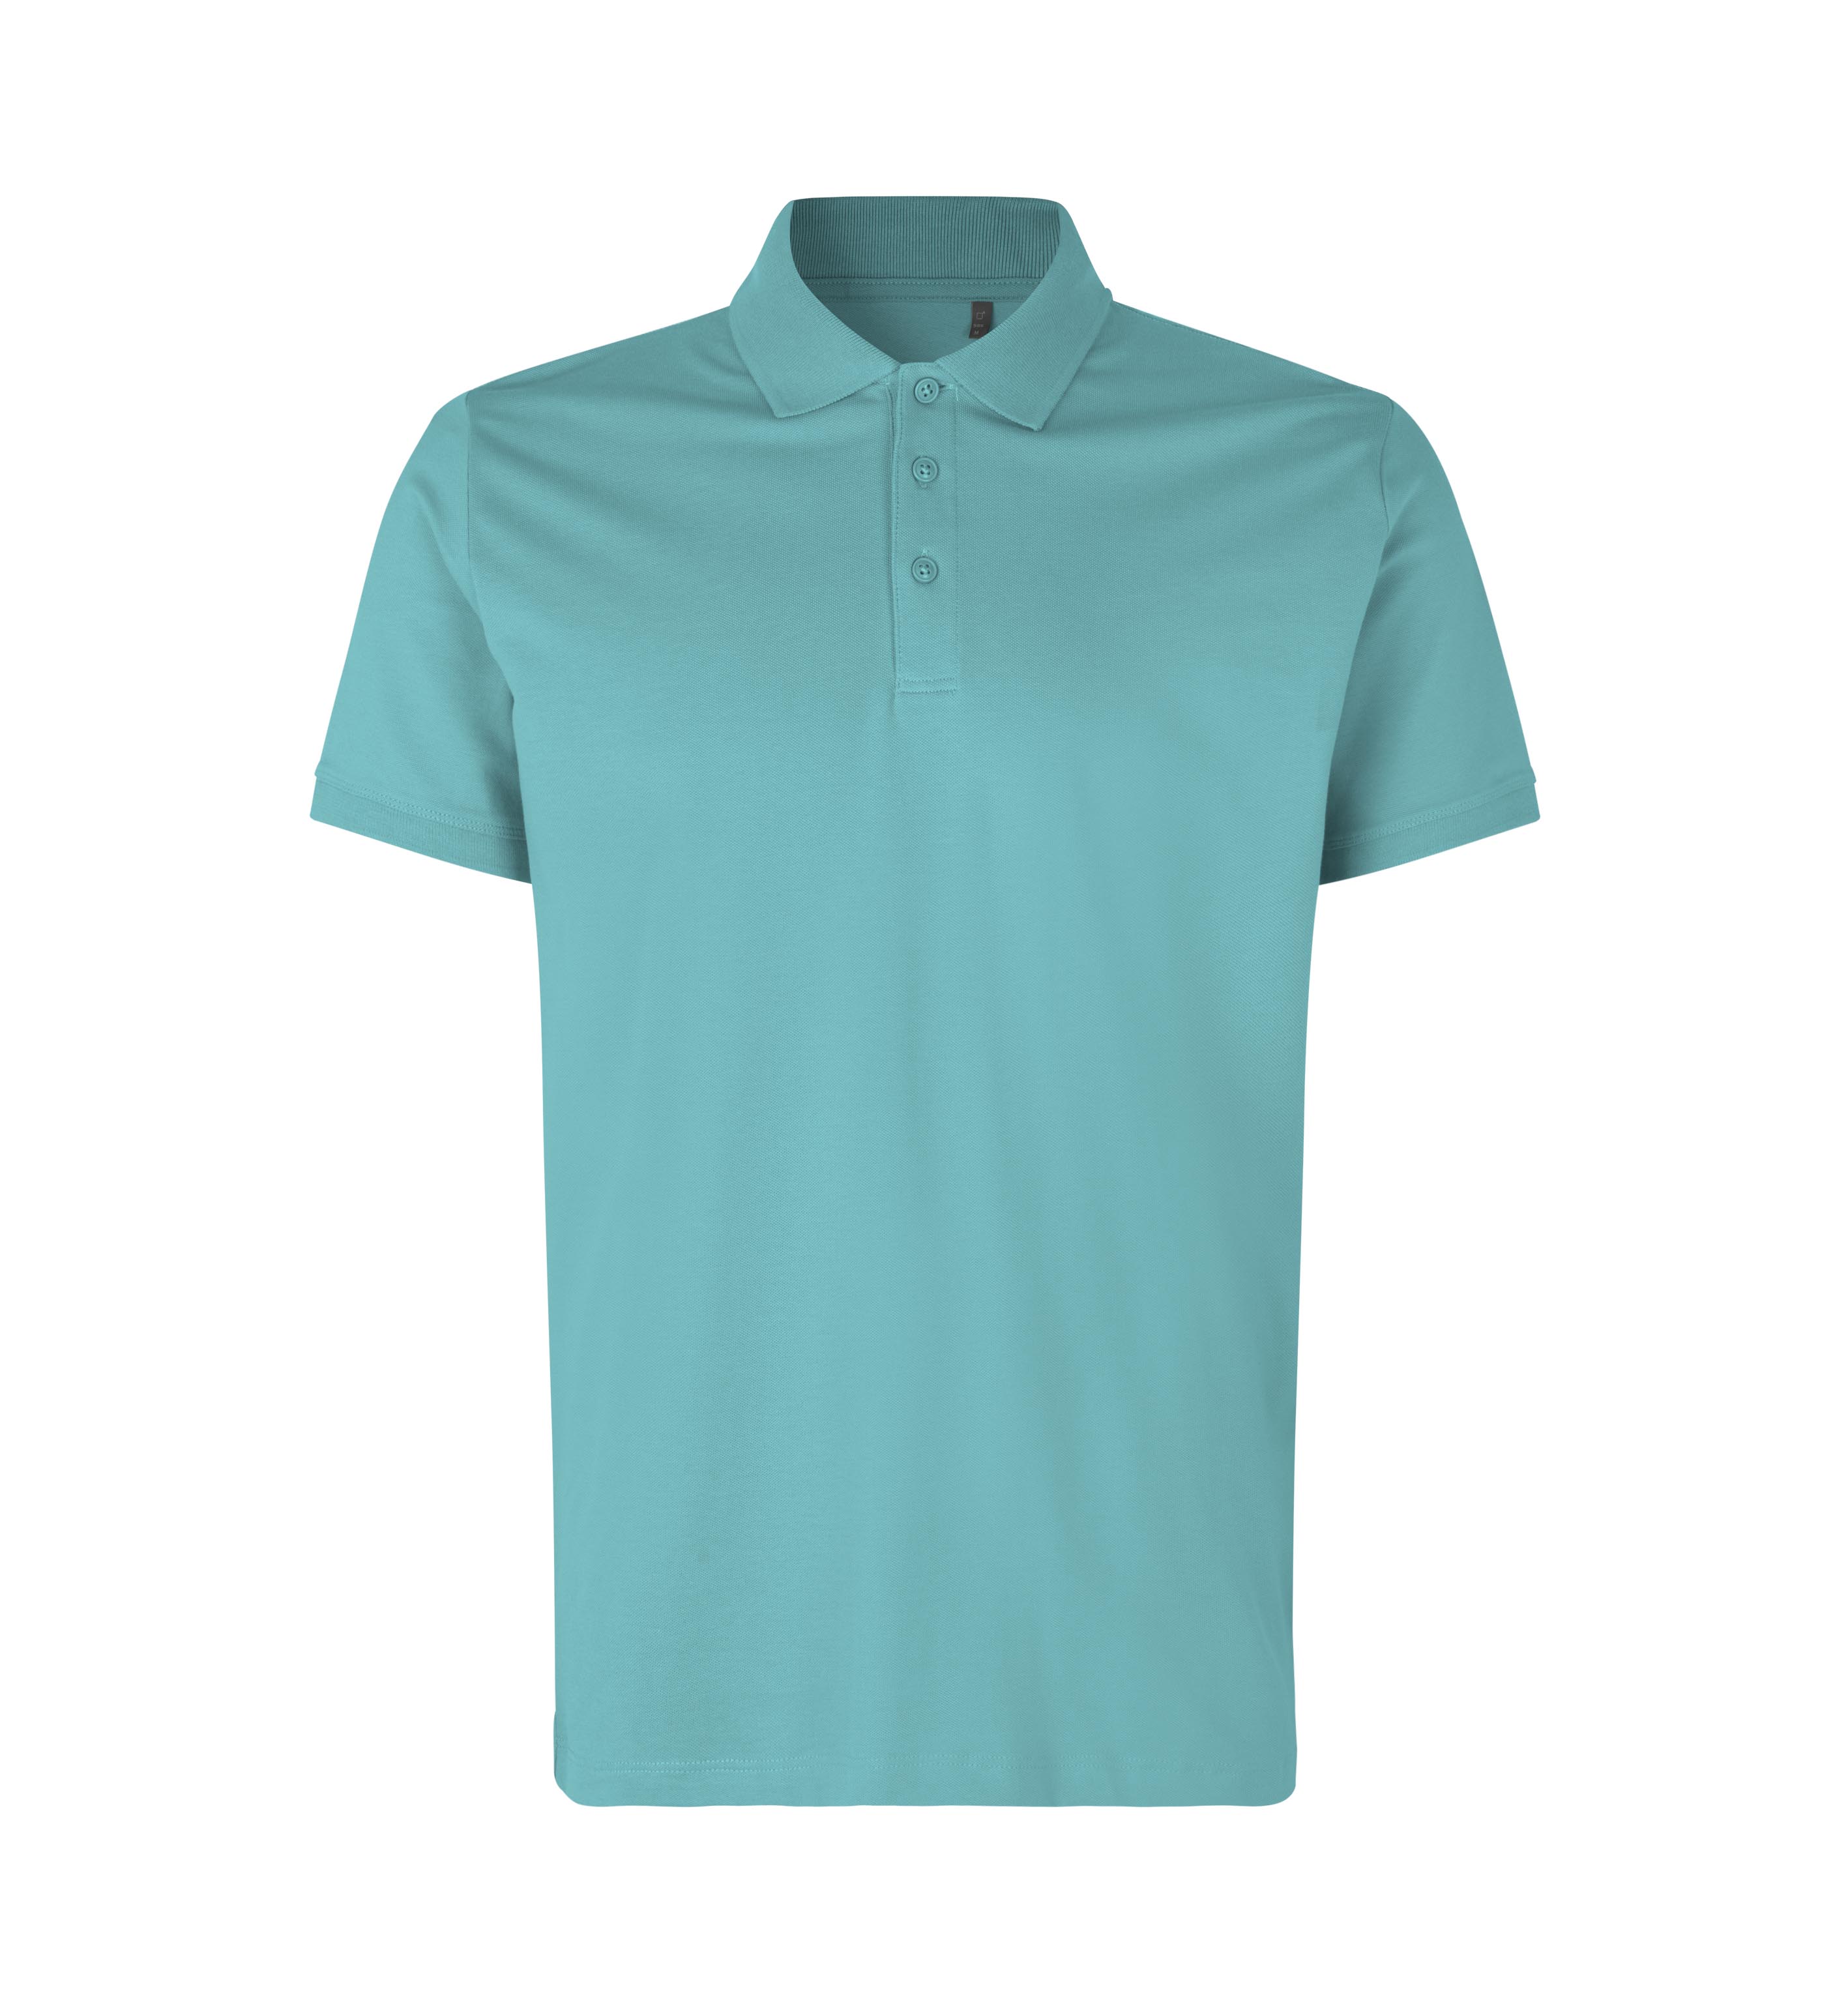 Men's organic cotton polo shirt 200 g/m² ID Identity®